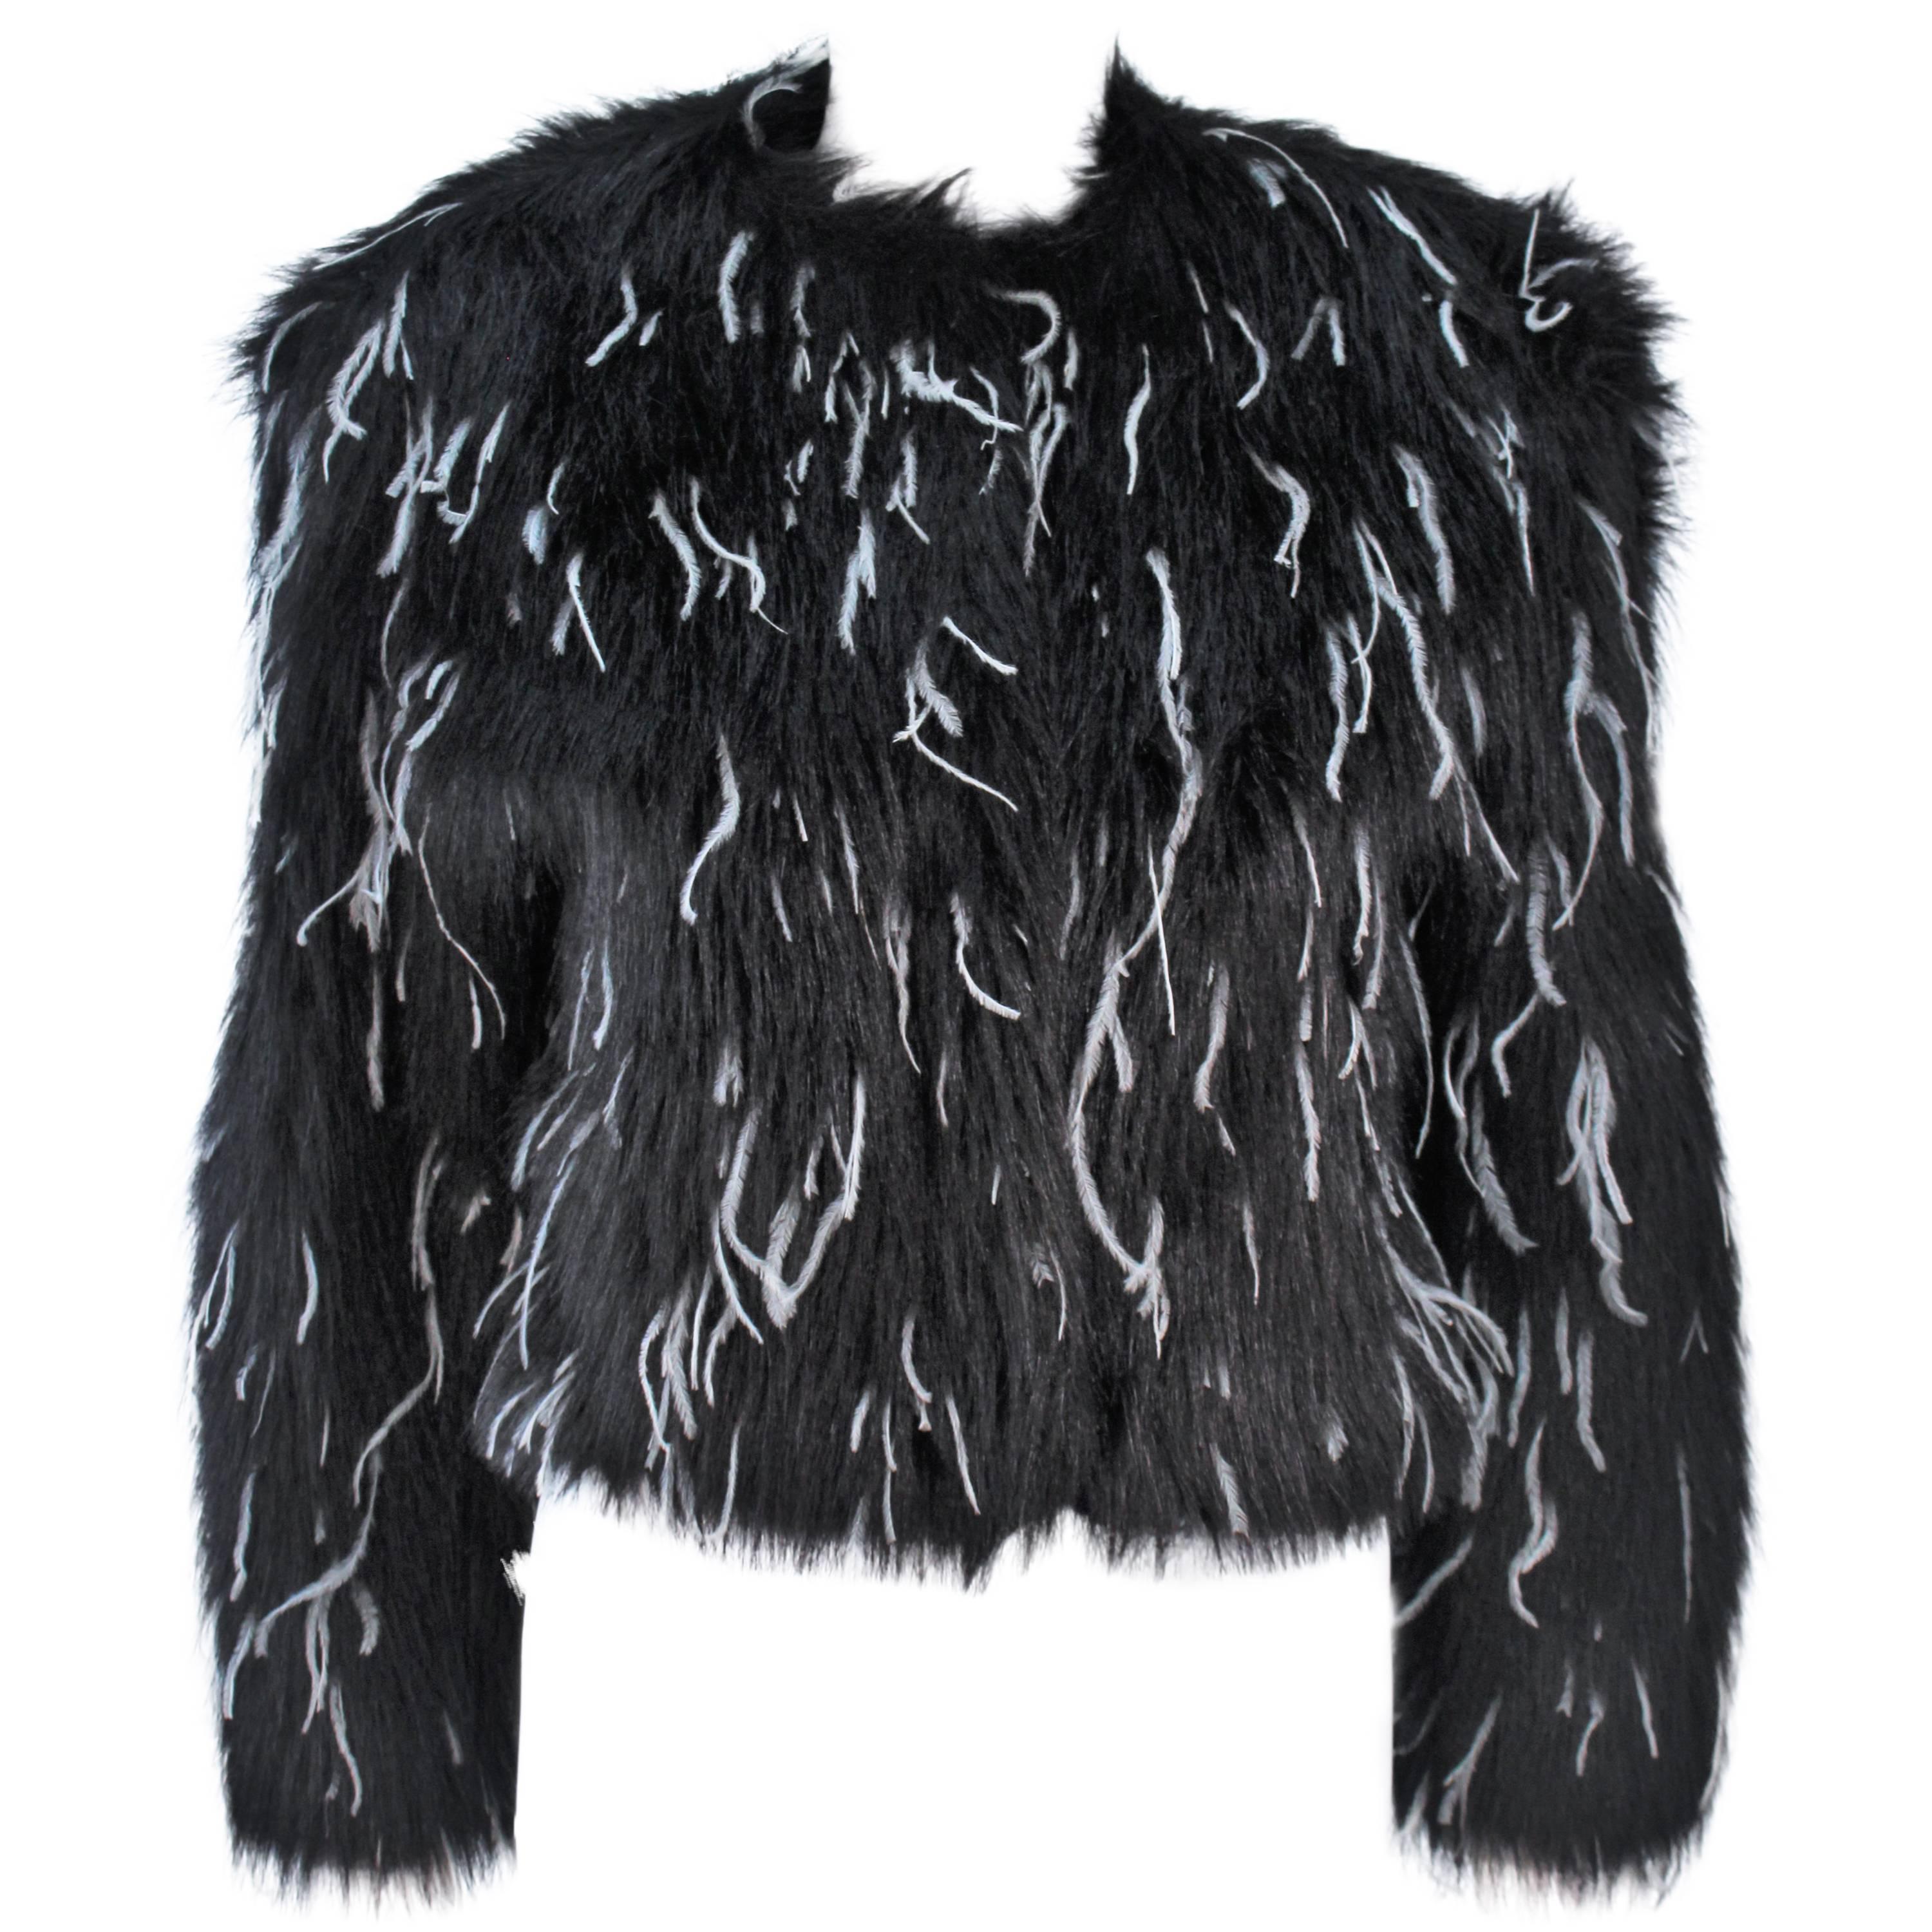 KRIZIA Black Faux Fur Jacket with White Ostrich Feathers Size 42